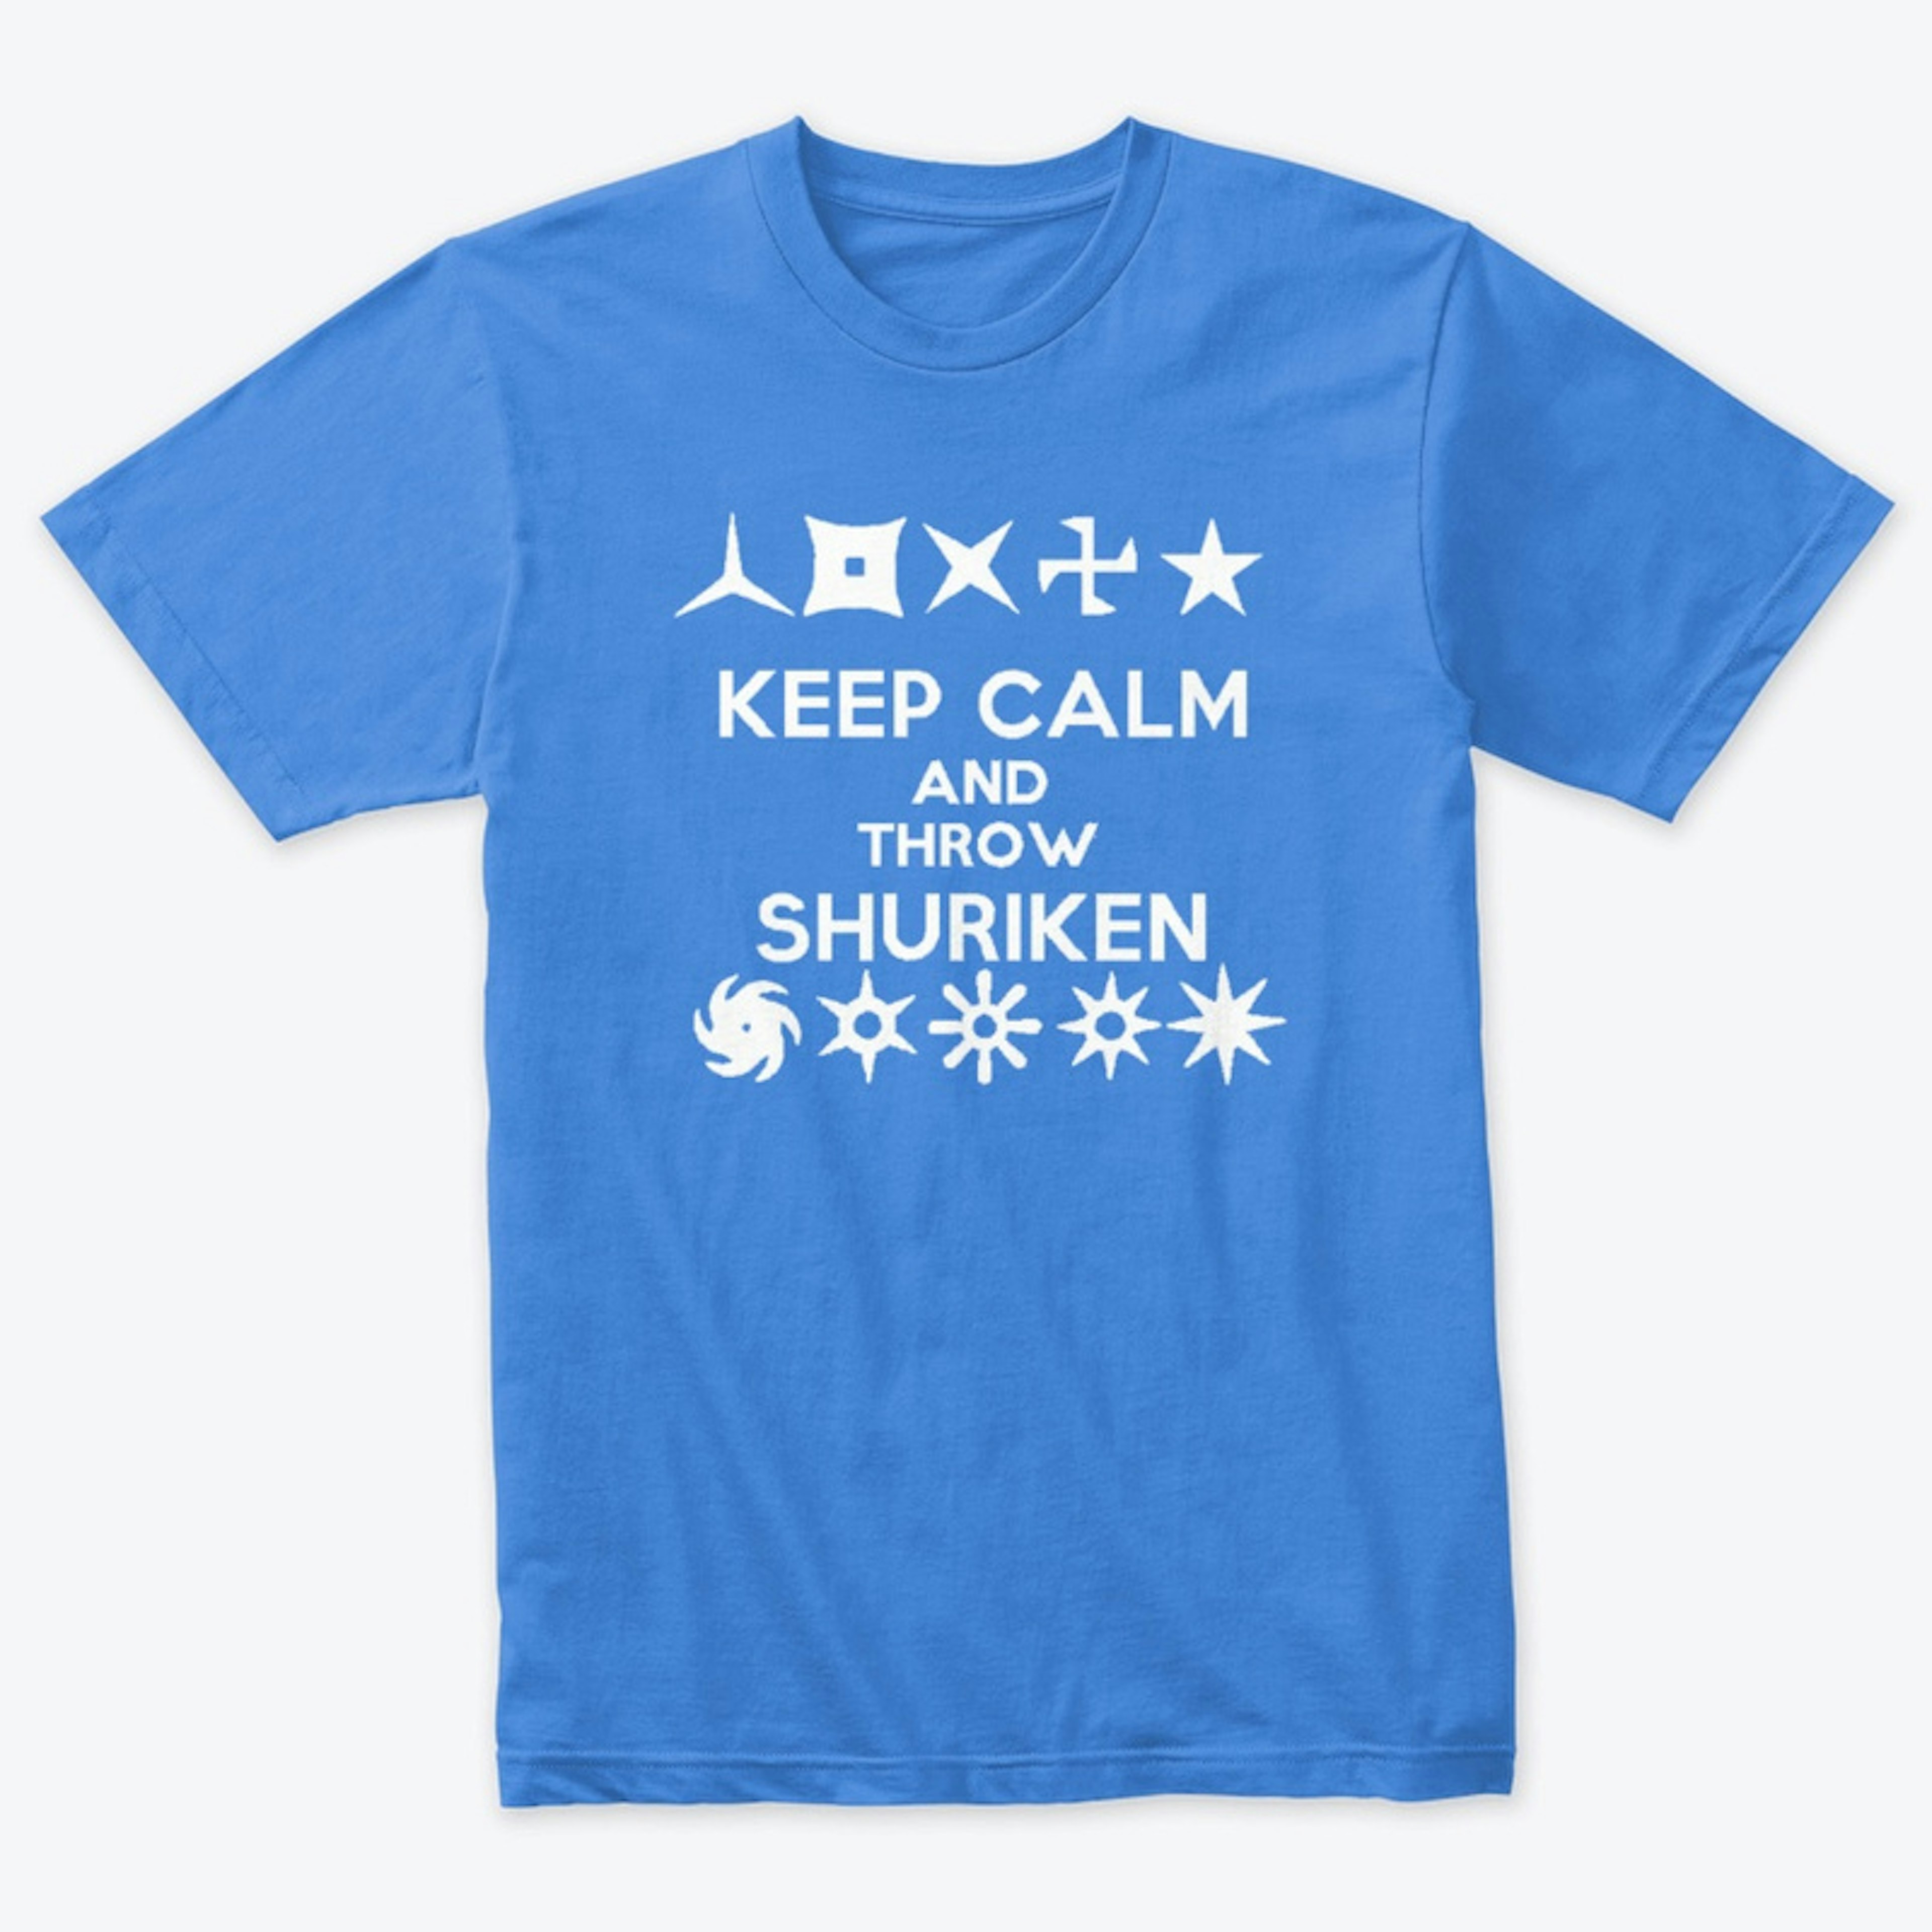 Keep Calm, Throw Shuriken